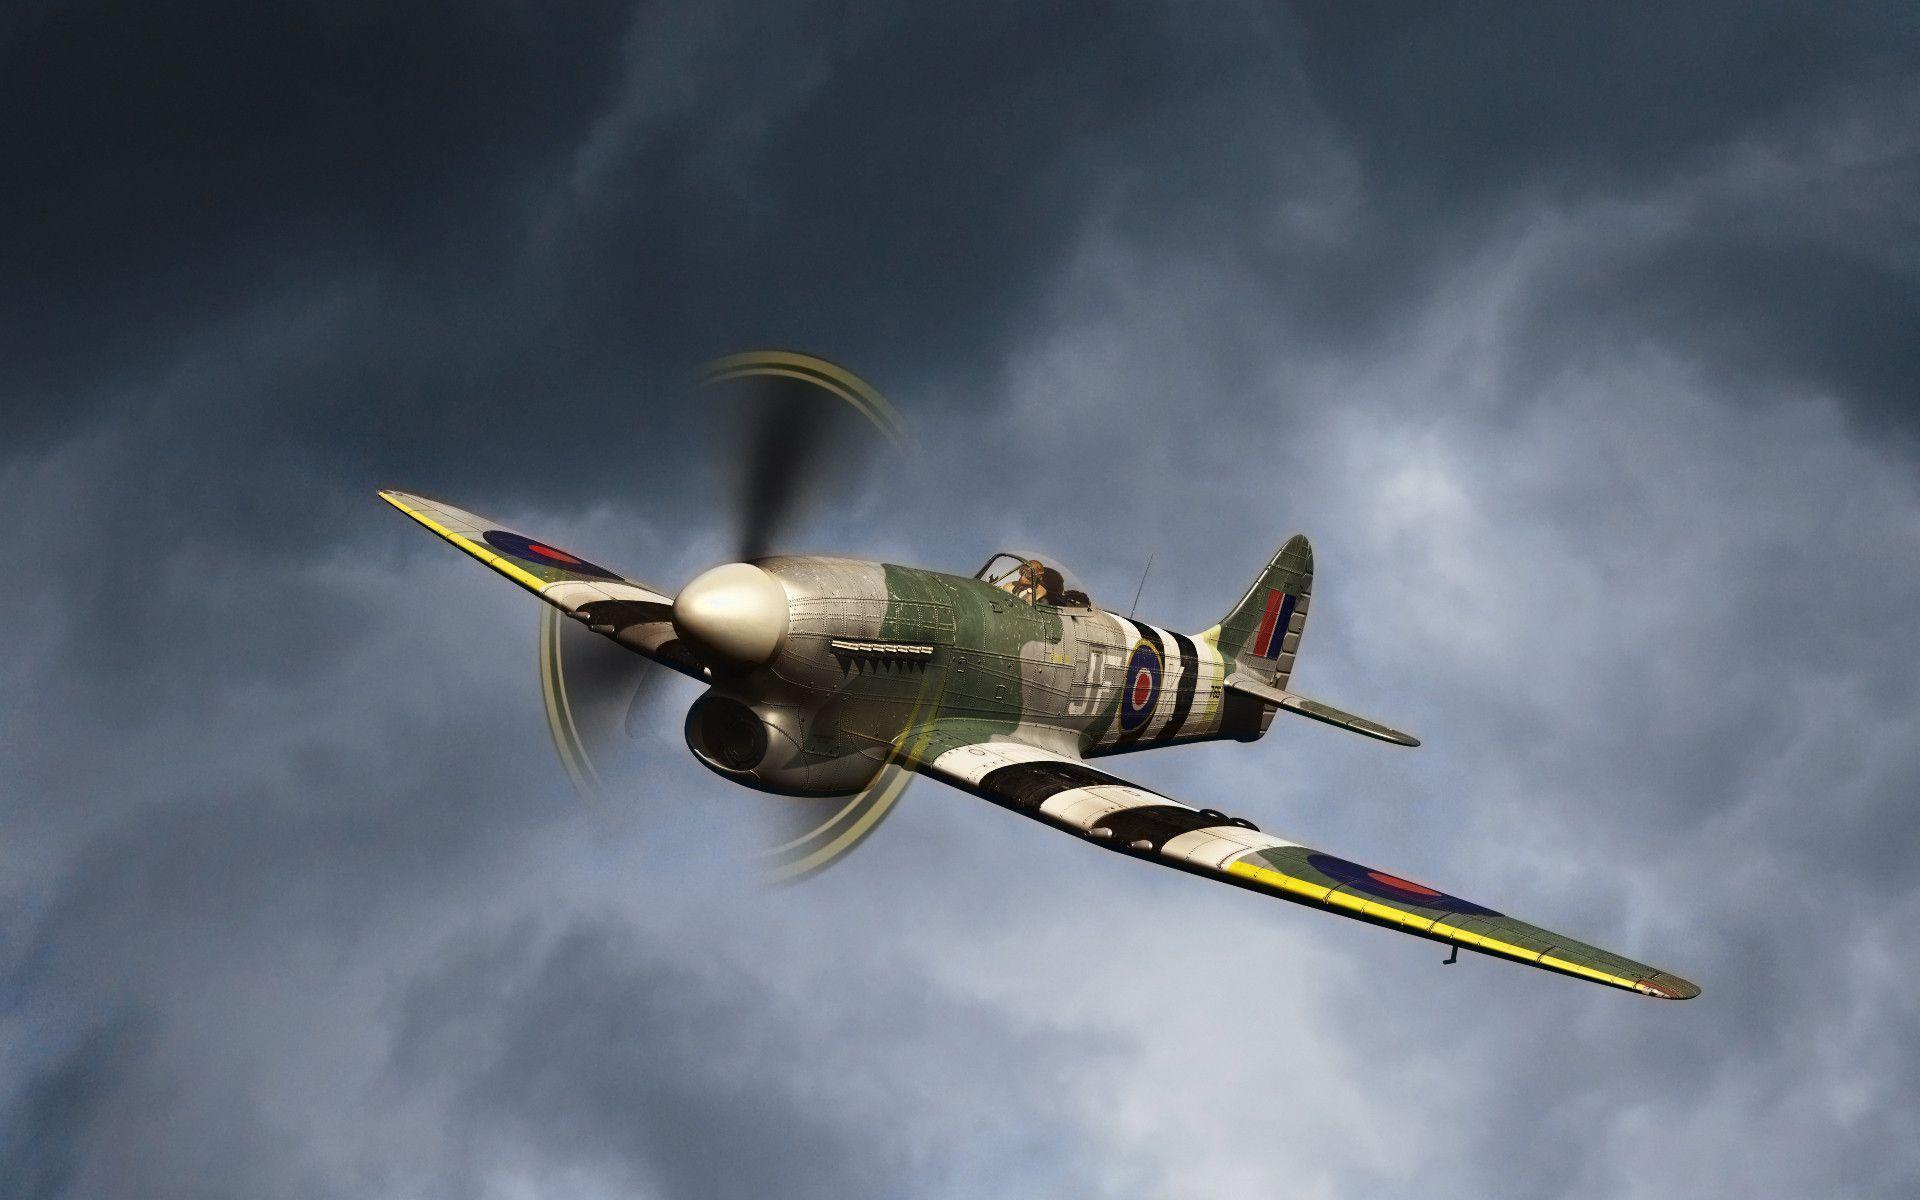 Spitfire Wallpaper, Aviation Wallpaper, the sky, the aircraft